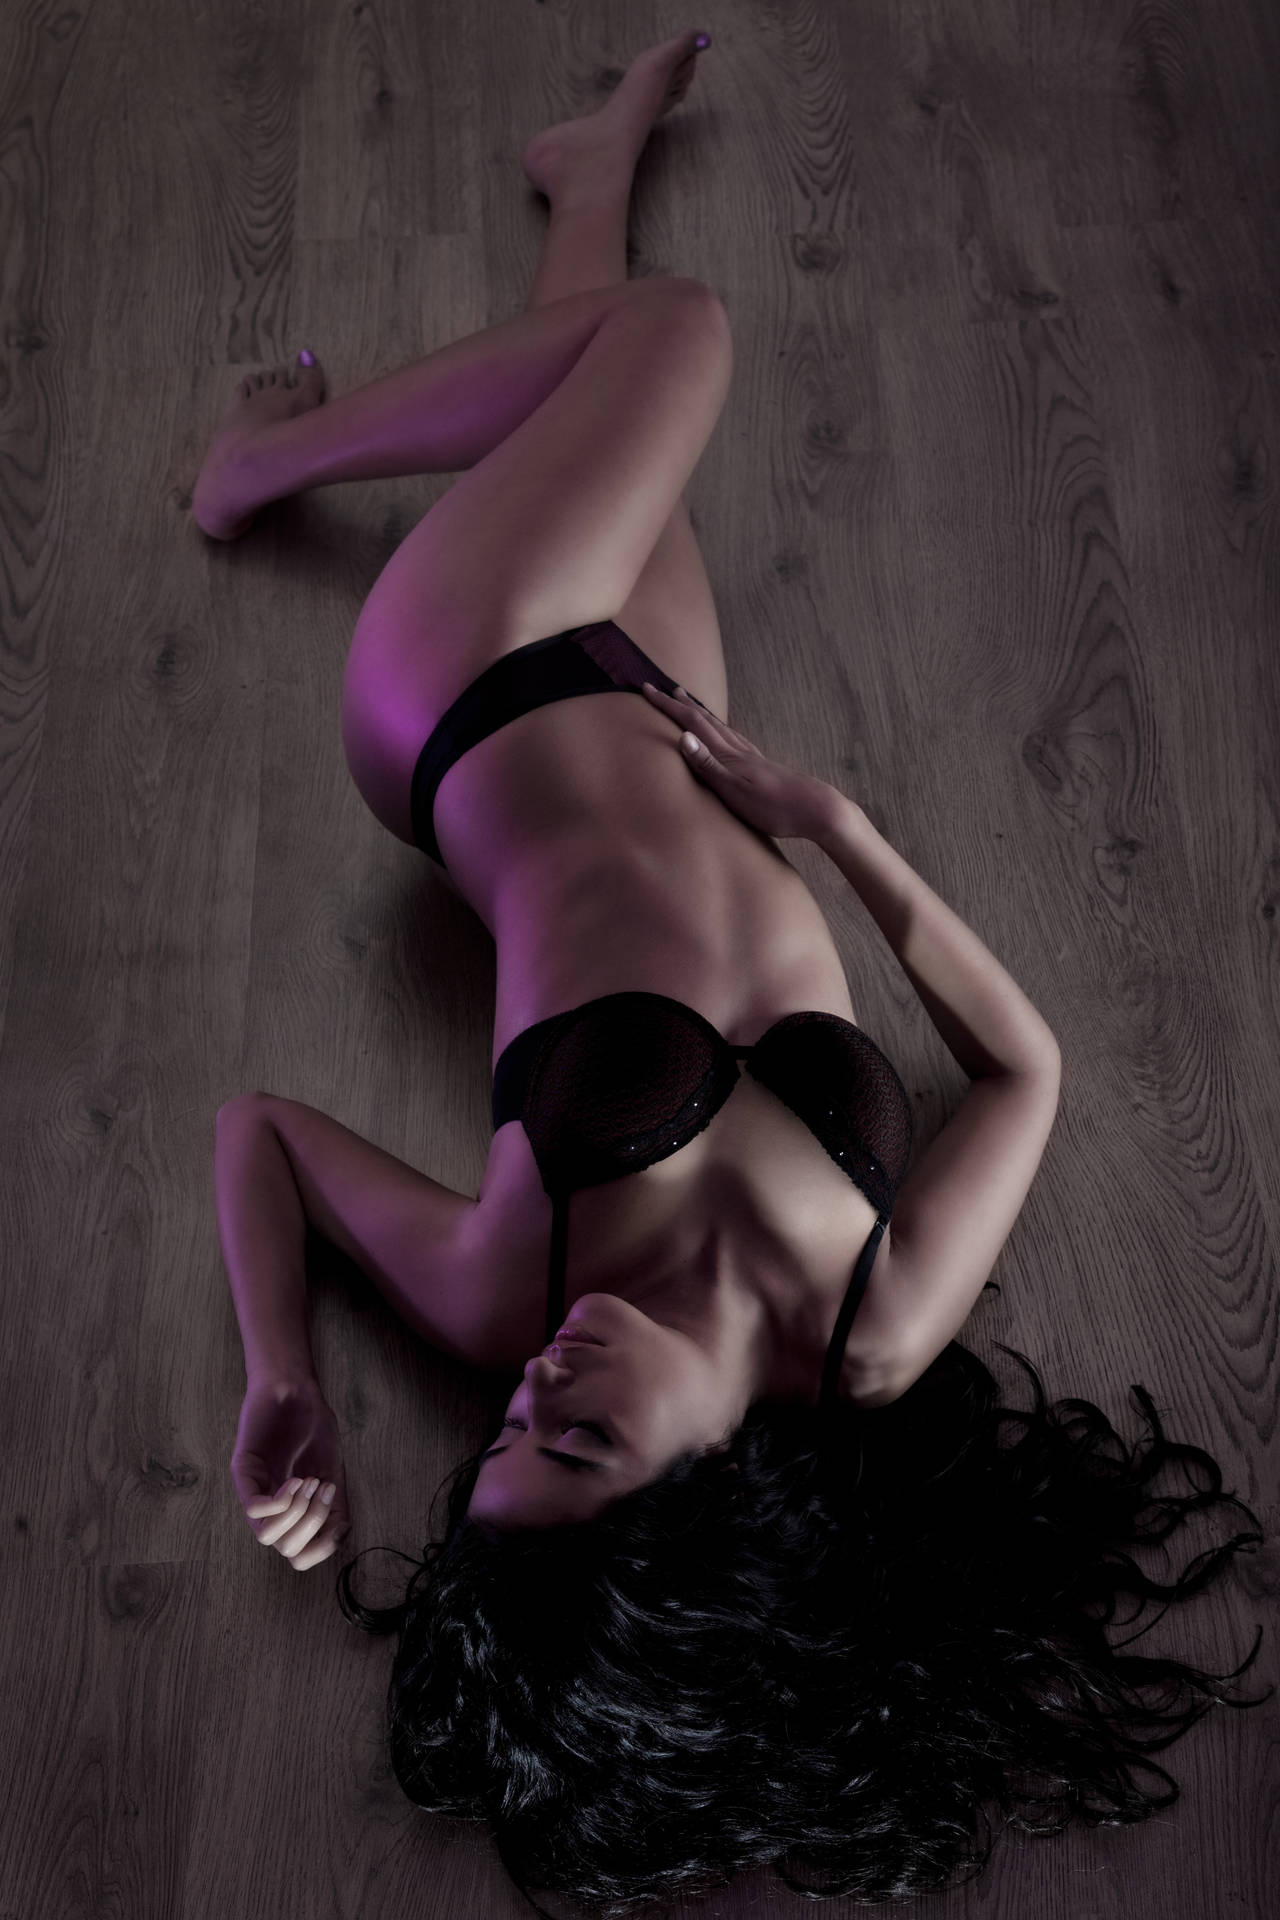 Lingerie, a bra and black panties, lying on a beige tile floor